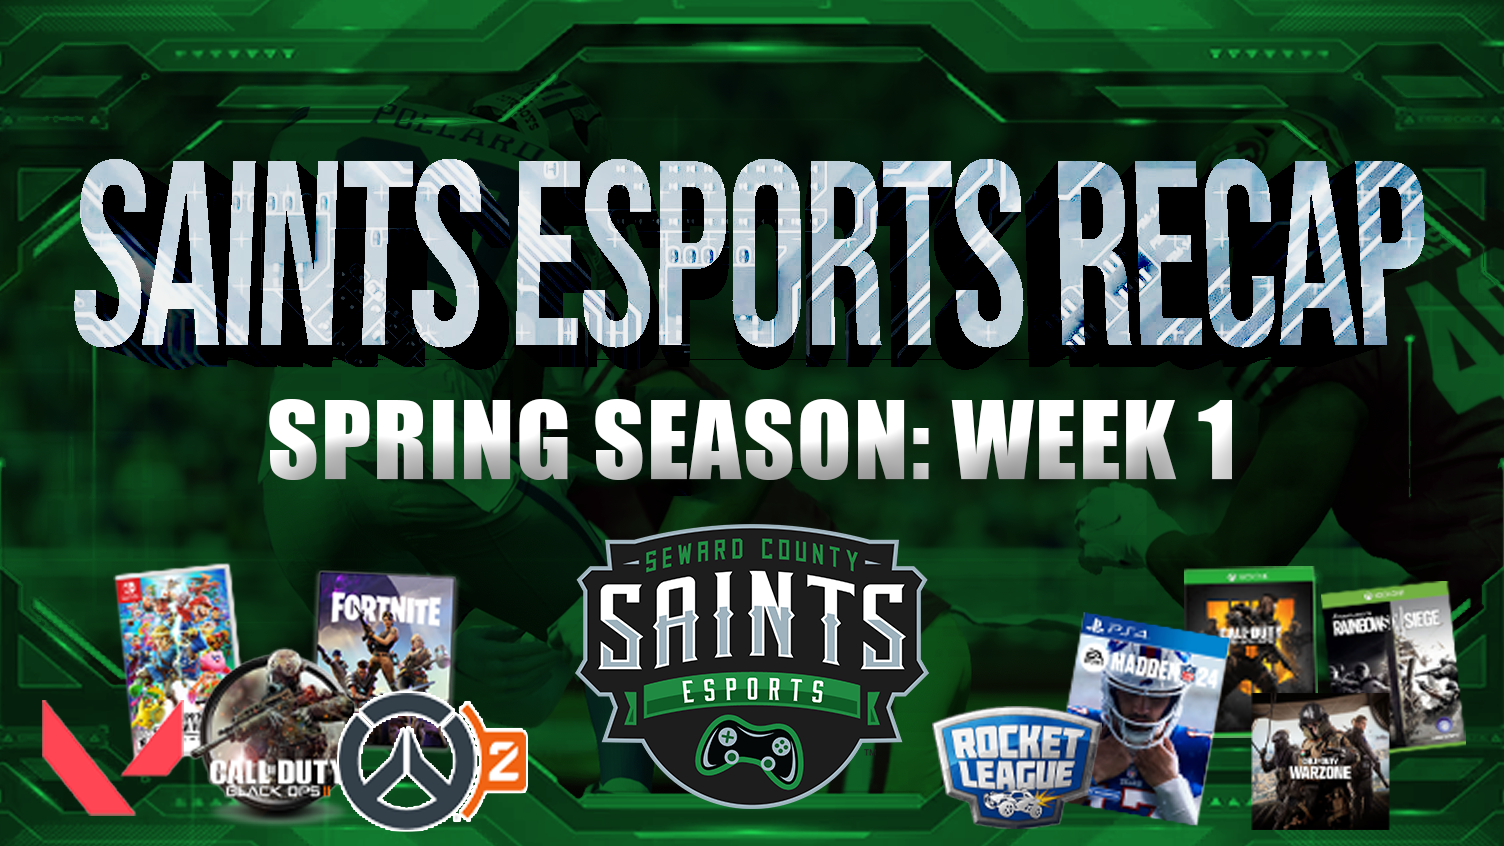 Seward County eSports Spring Week 1 Recap